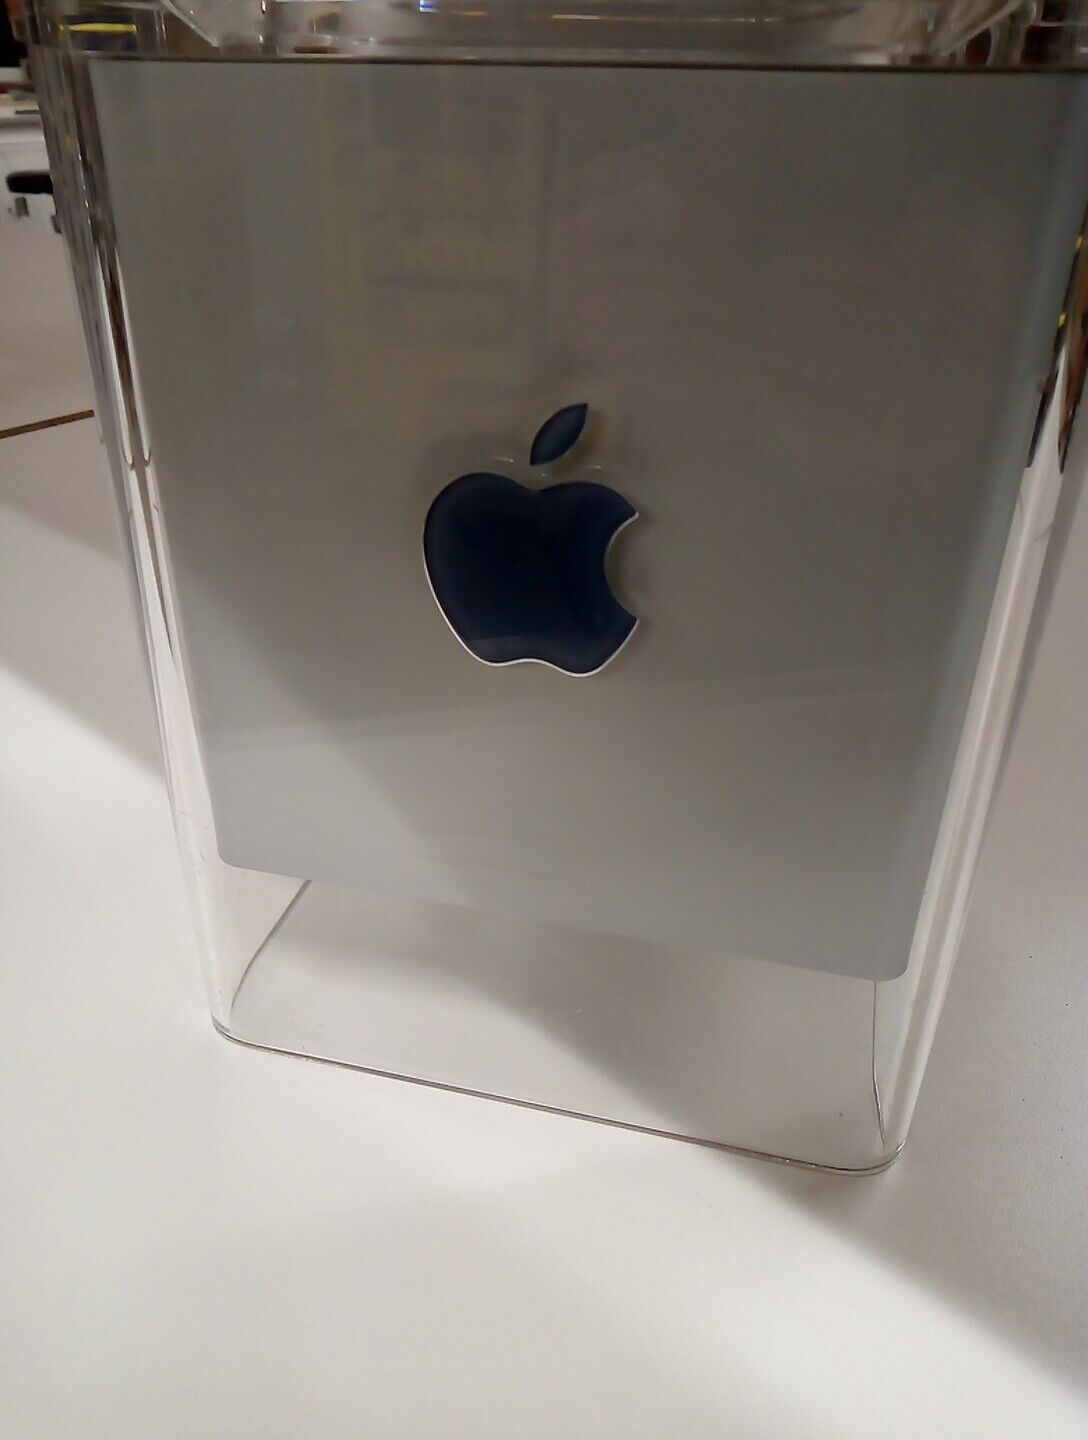 Apple Power Mac G4 Cube 